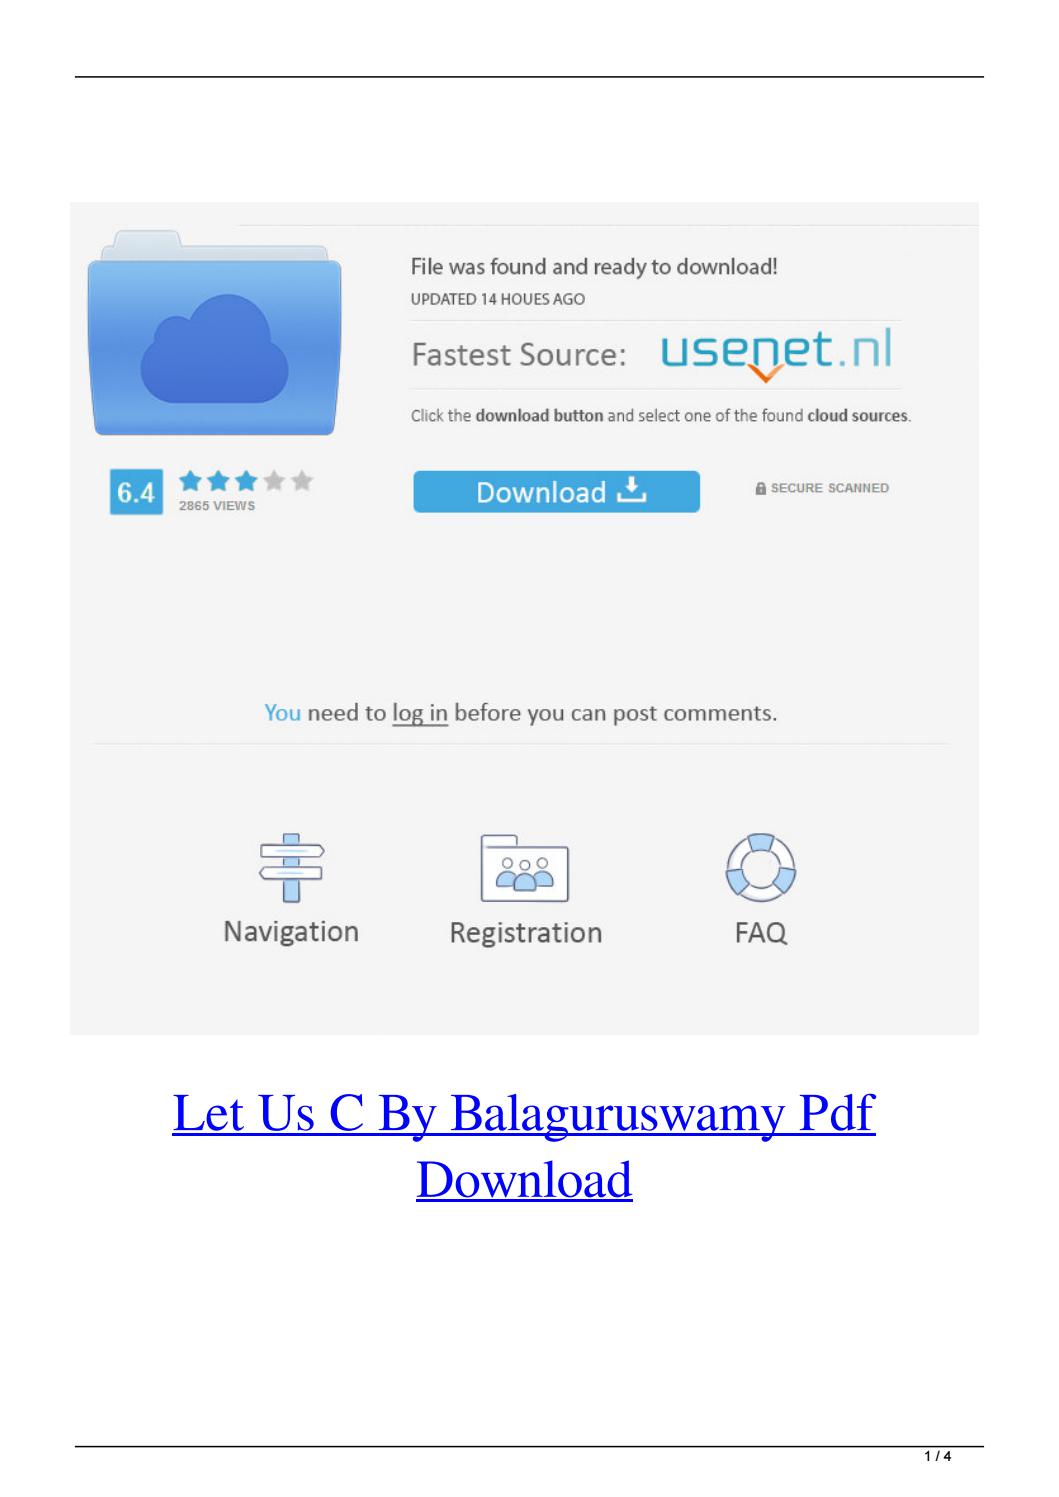 fundamentals of computer by balaguruswamy pdf free download